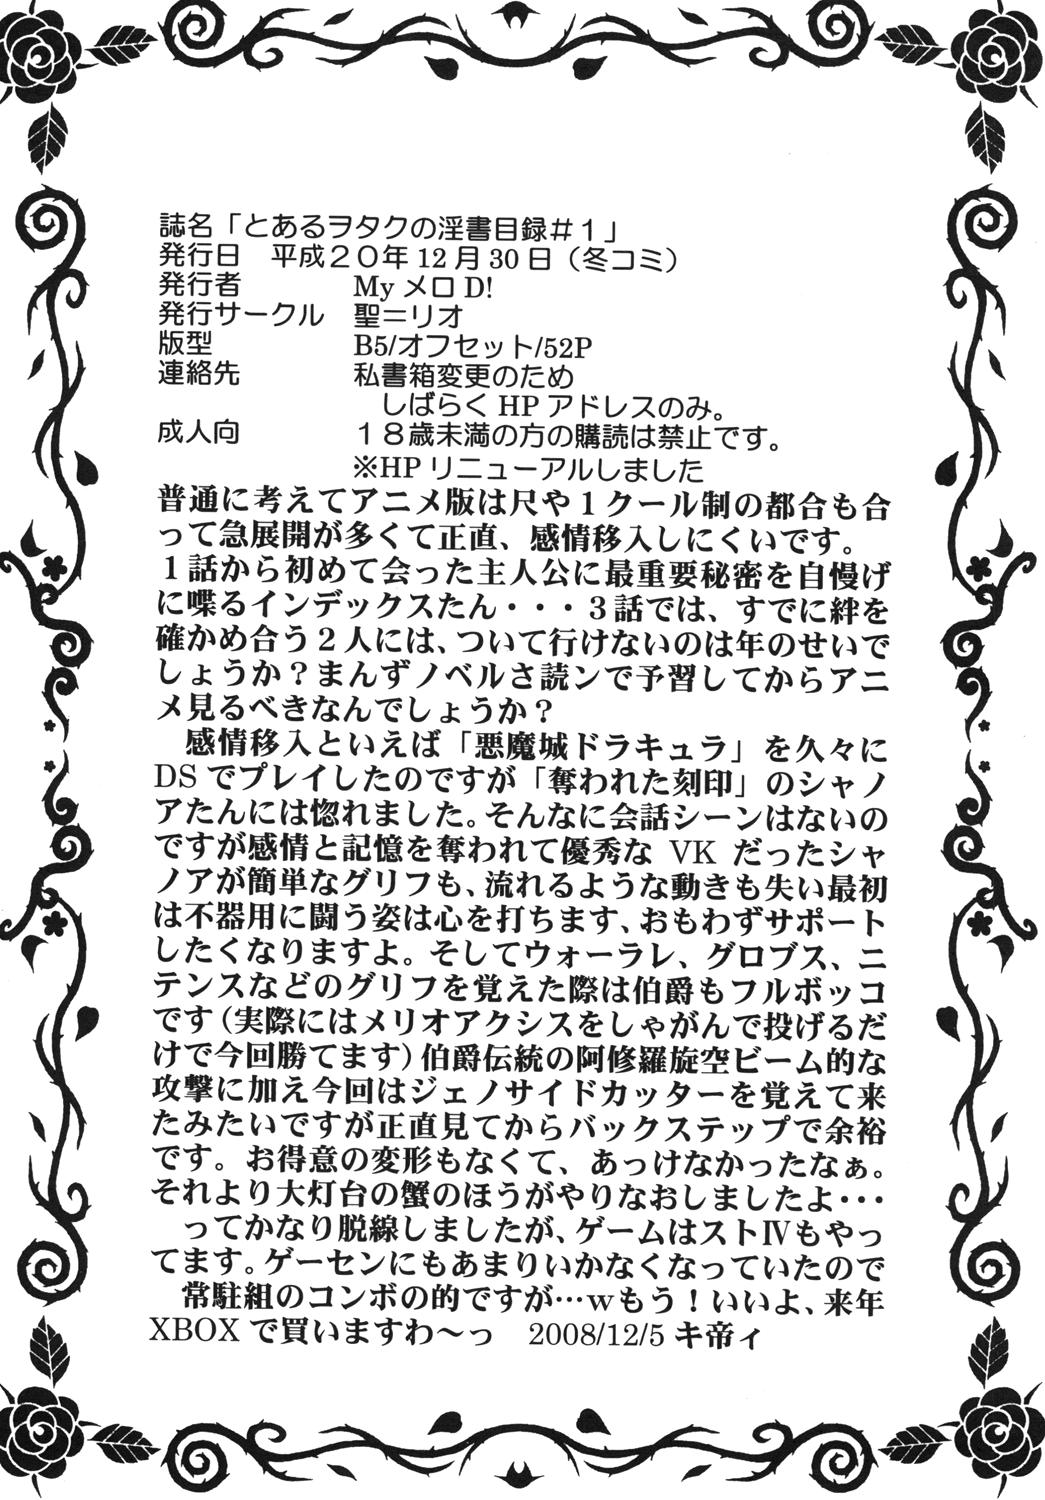 Toaru Otaku no Index #1 | A Certain Otaku Index #1 48